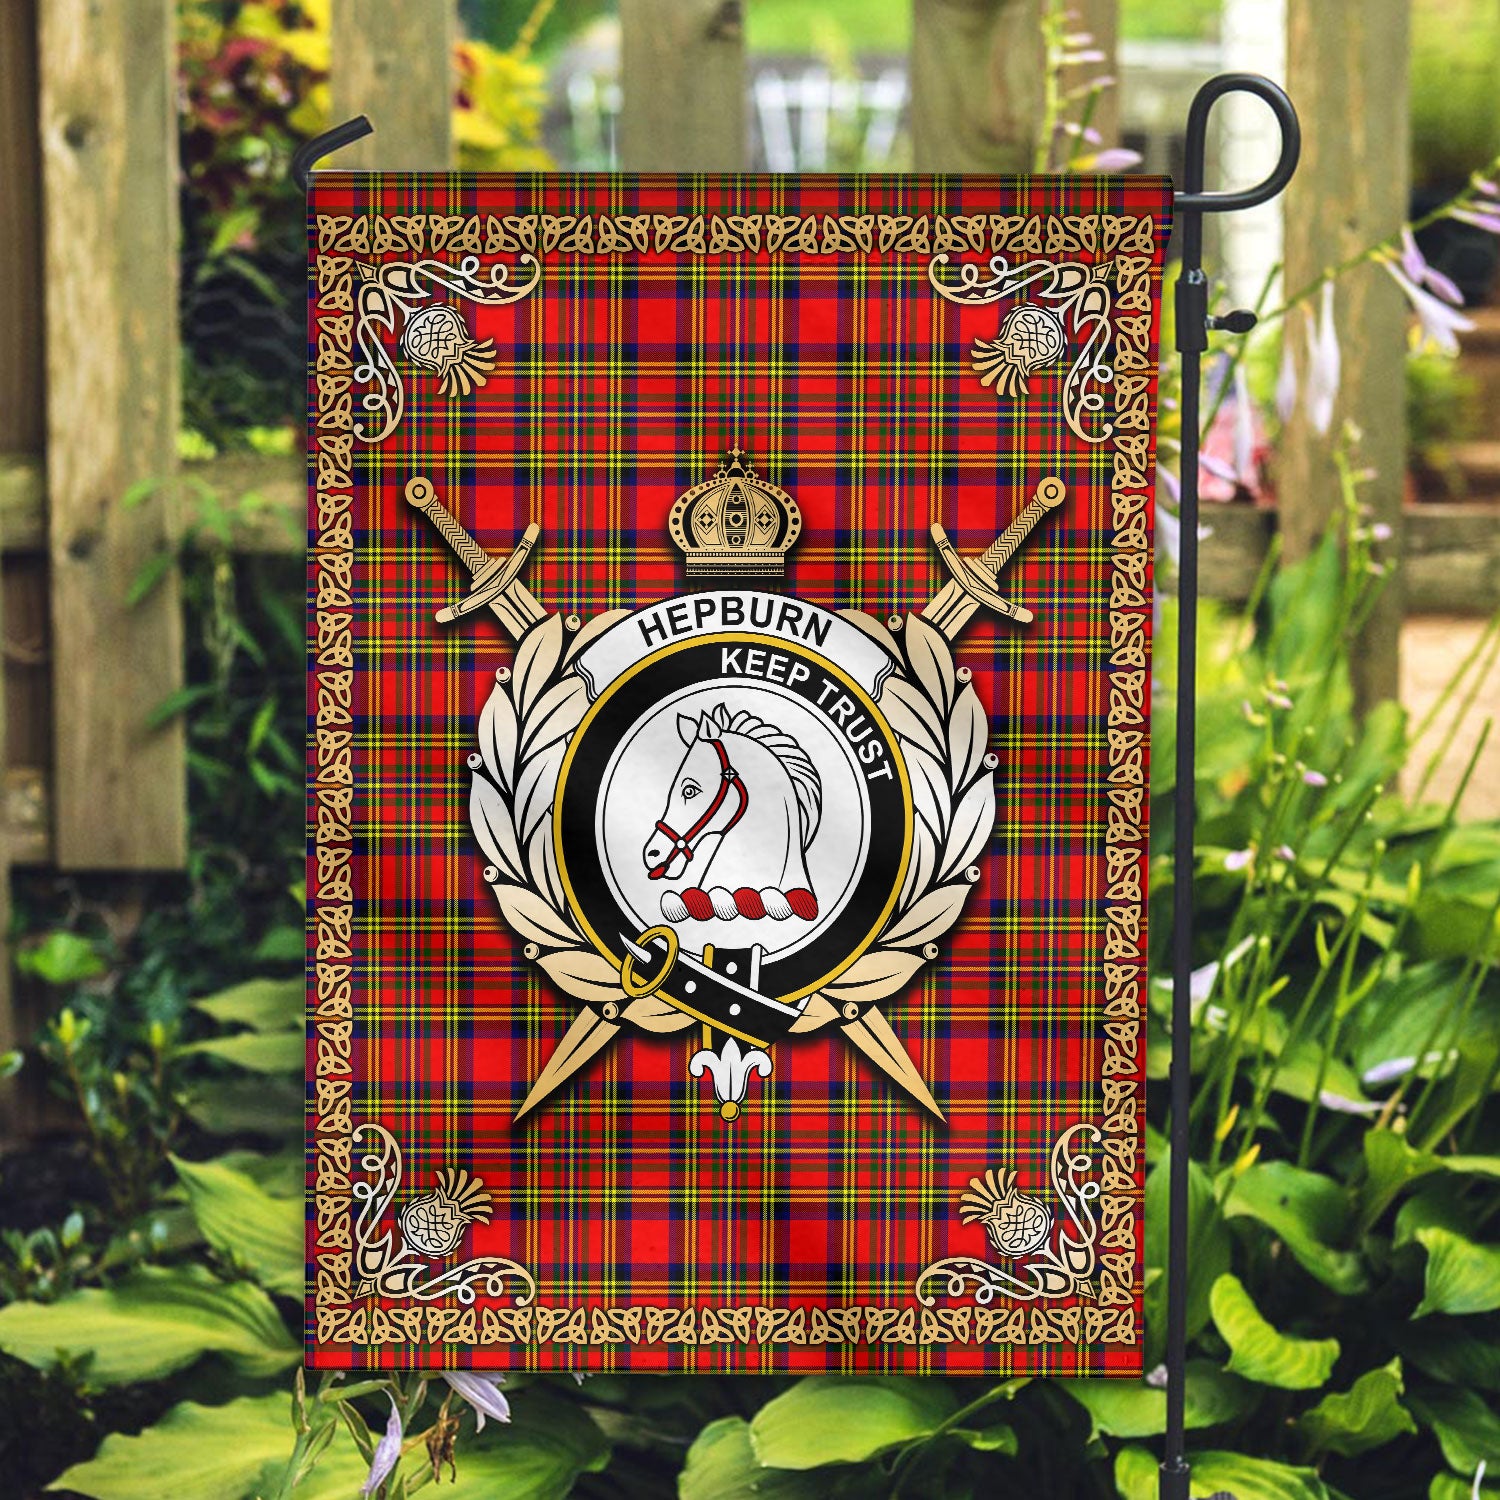 Hepburn Tartan Crest Garden Flag - Celtic Thistle Style